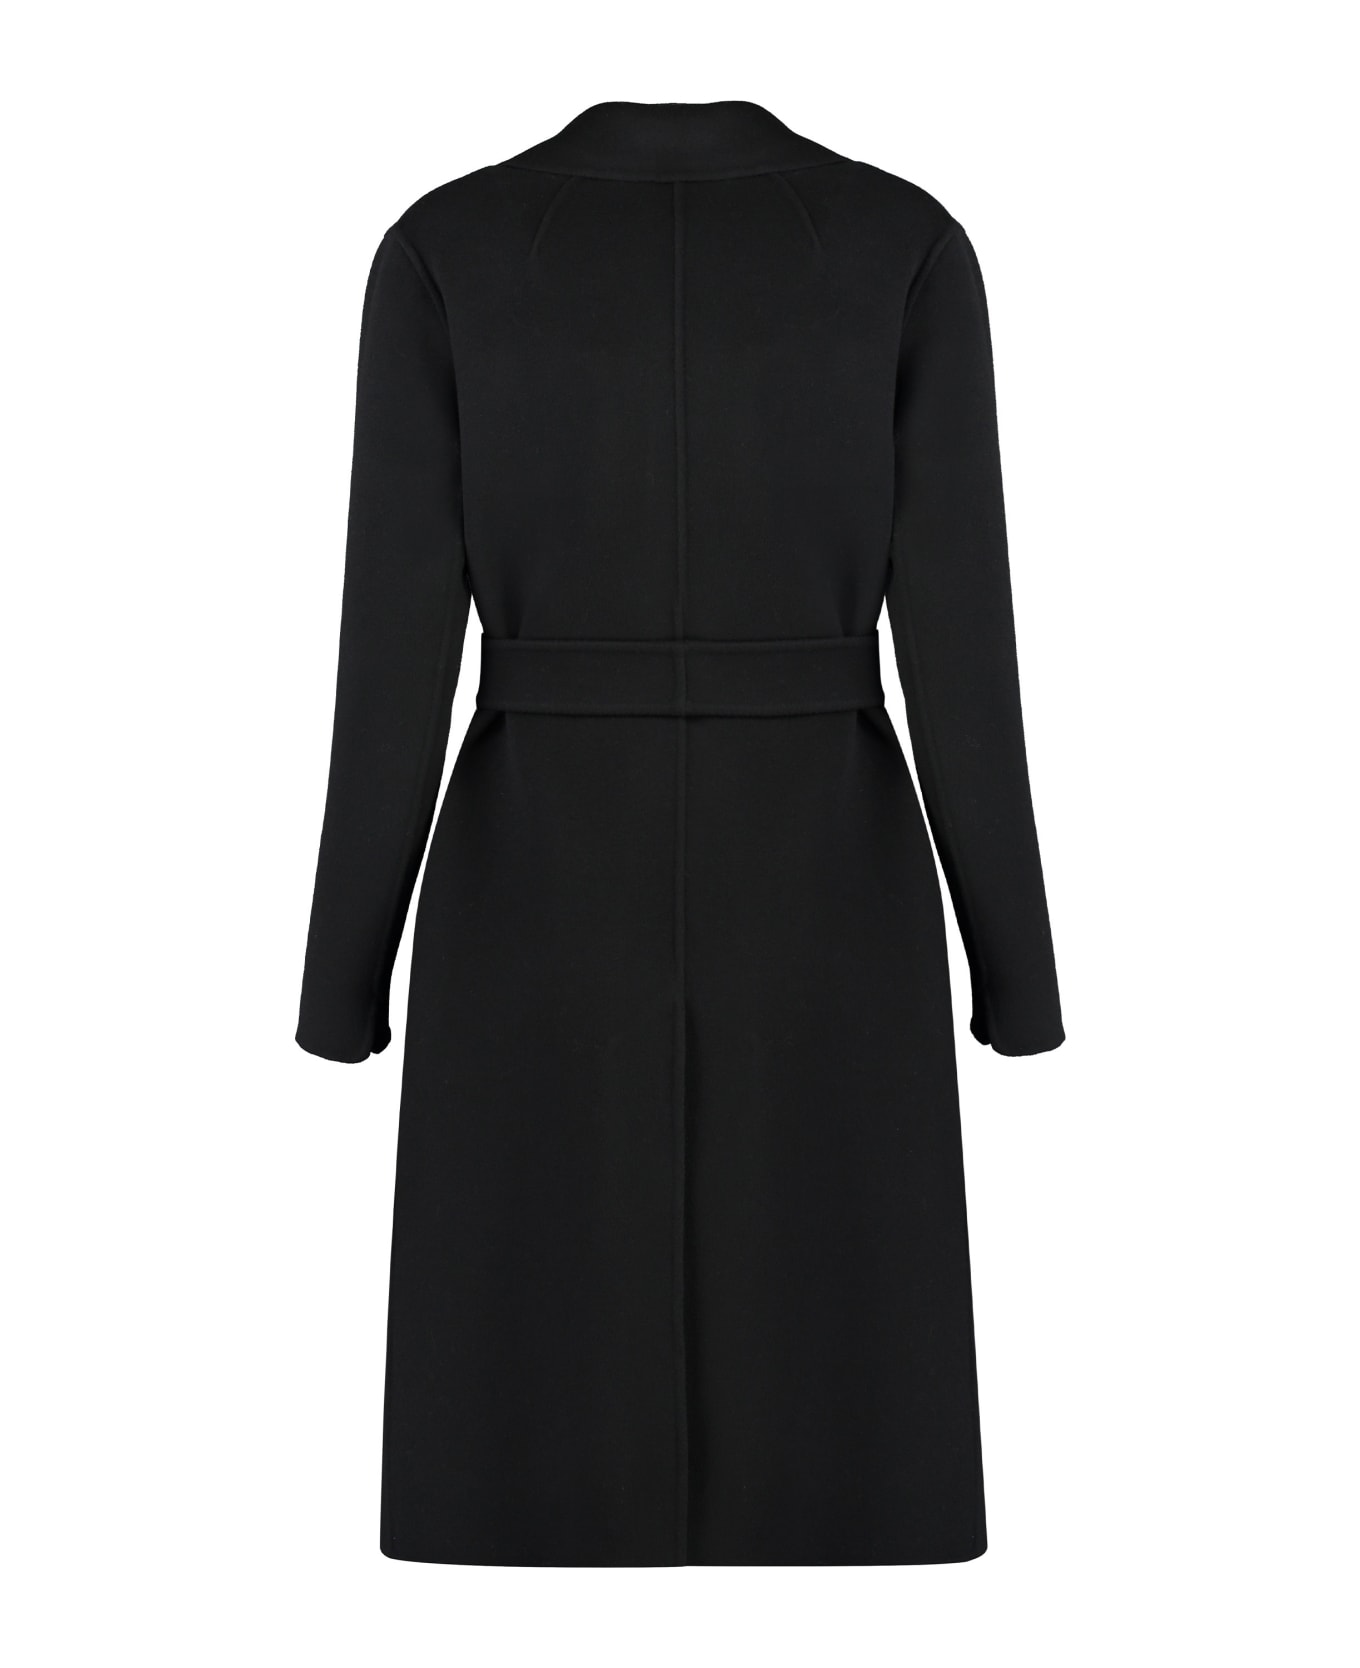 'S Max Mara Pauline Wool Coat - black